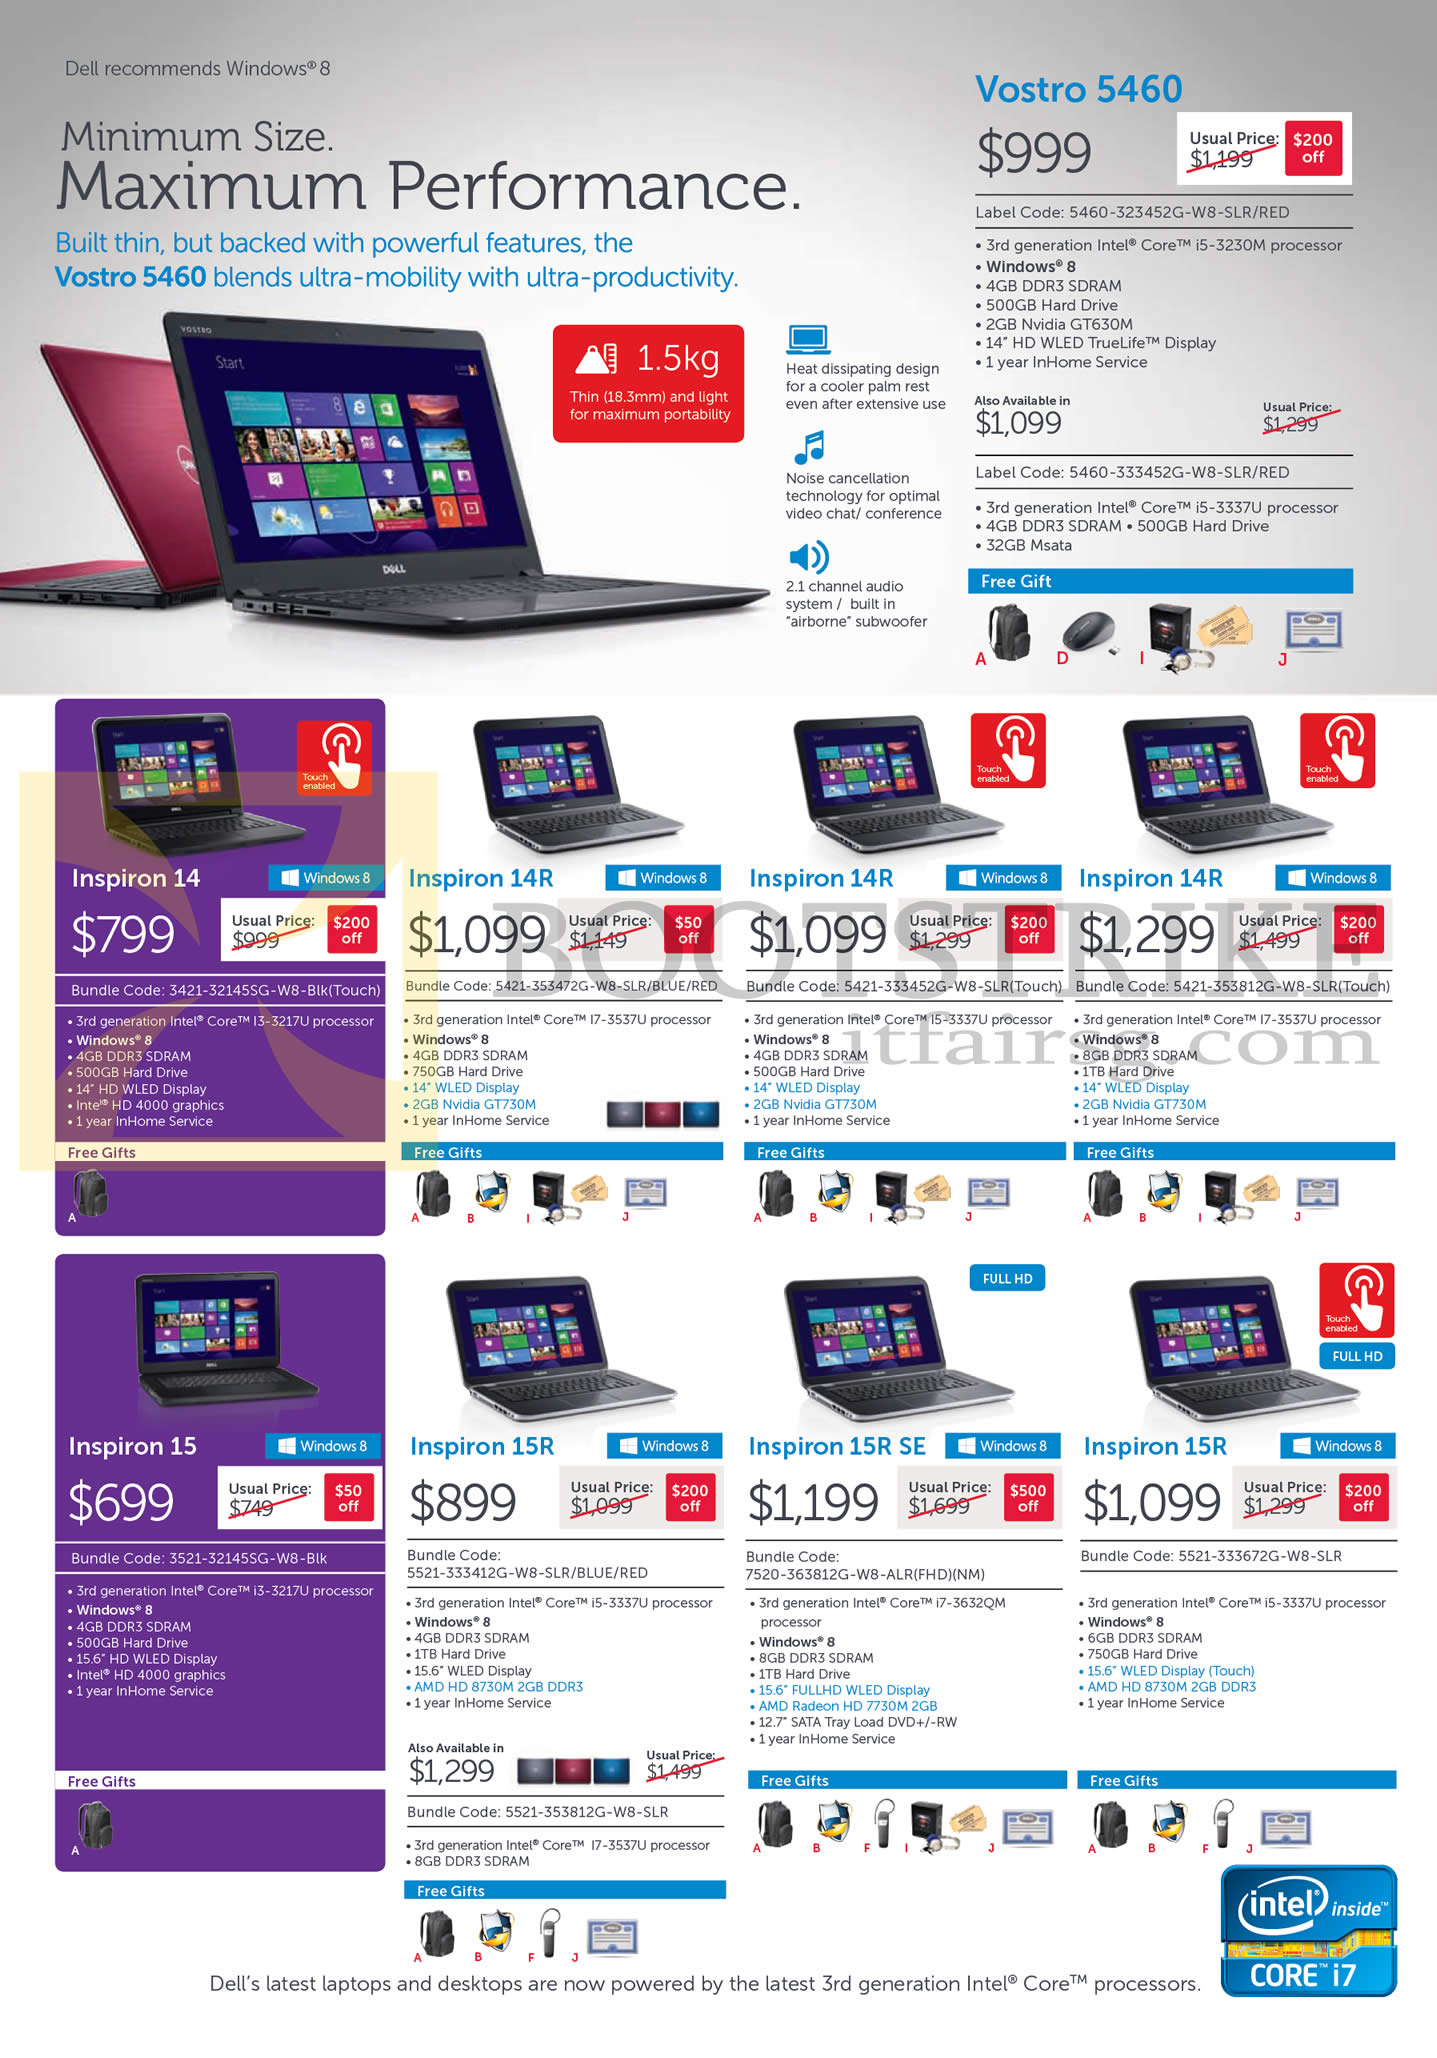 PC SHOW 2013 price list image brochure of Dell Notebooks Vostro 5460, Inspiron 14, 14R, 15, 15R, 15R SE